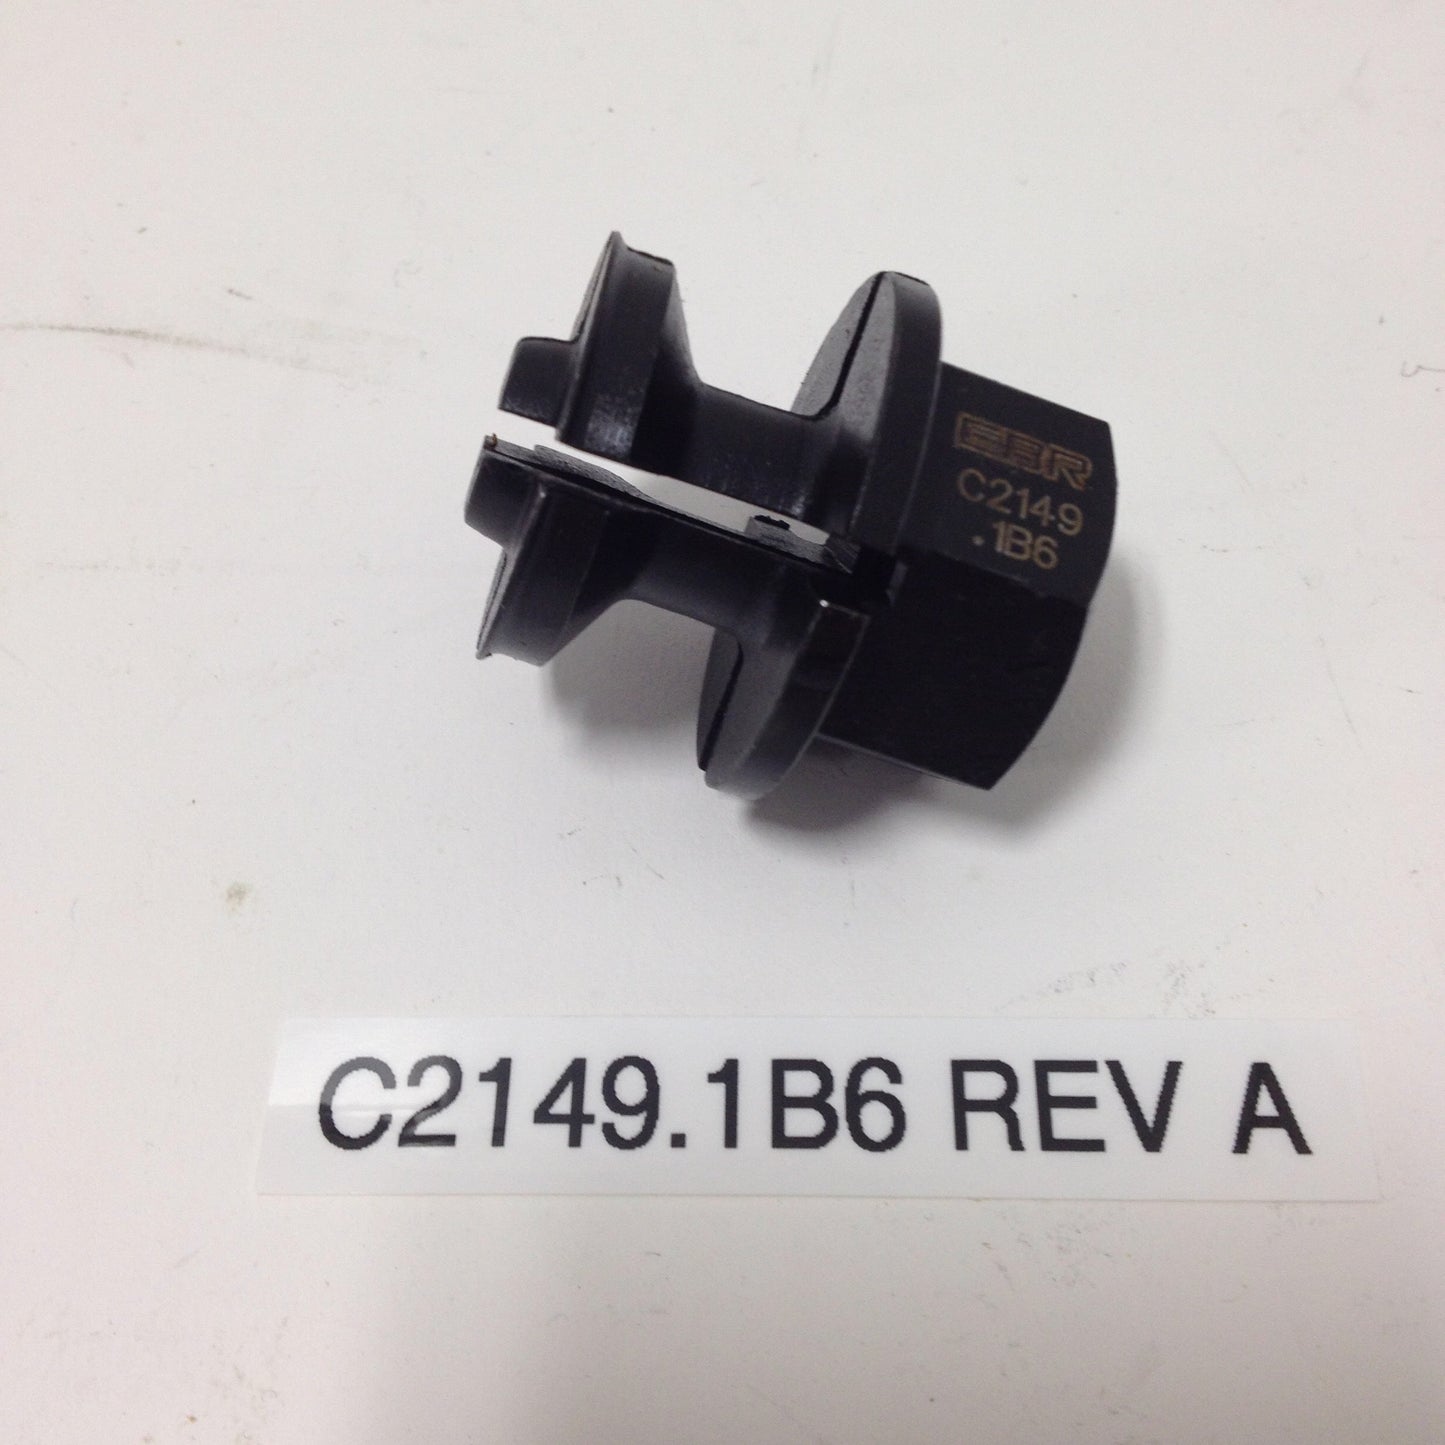 Bearing Remover C2149.1B6 Rev A